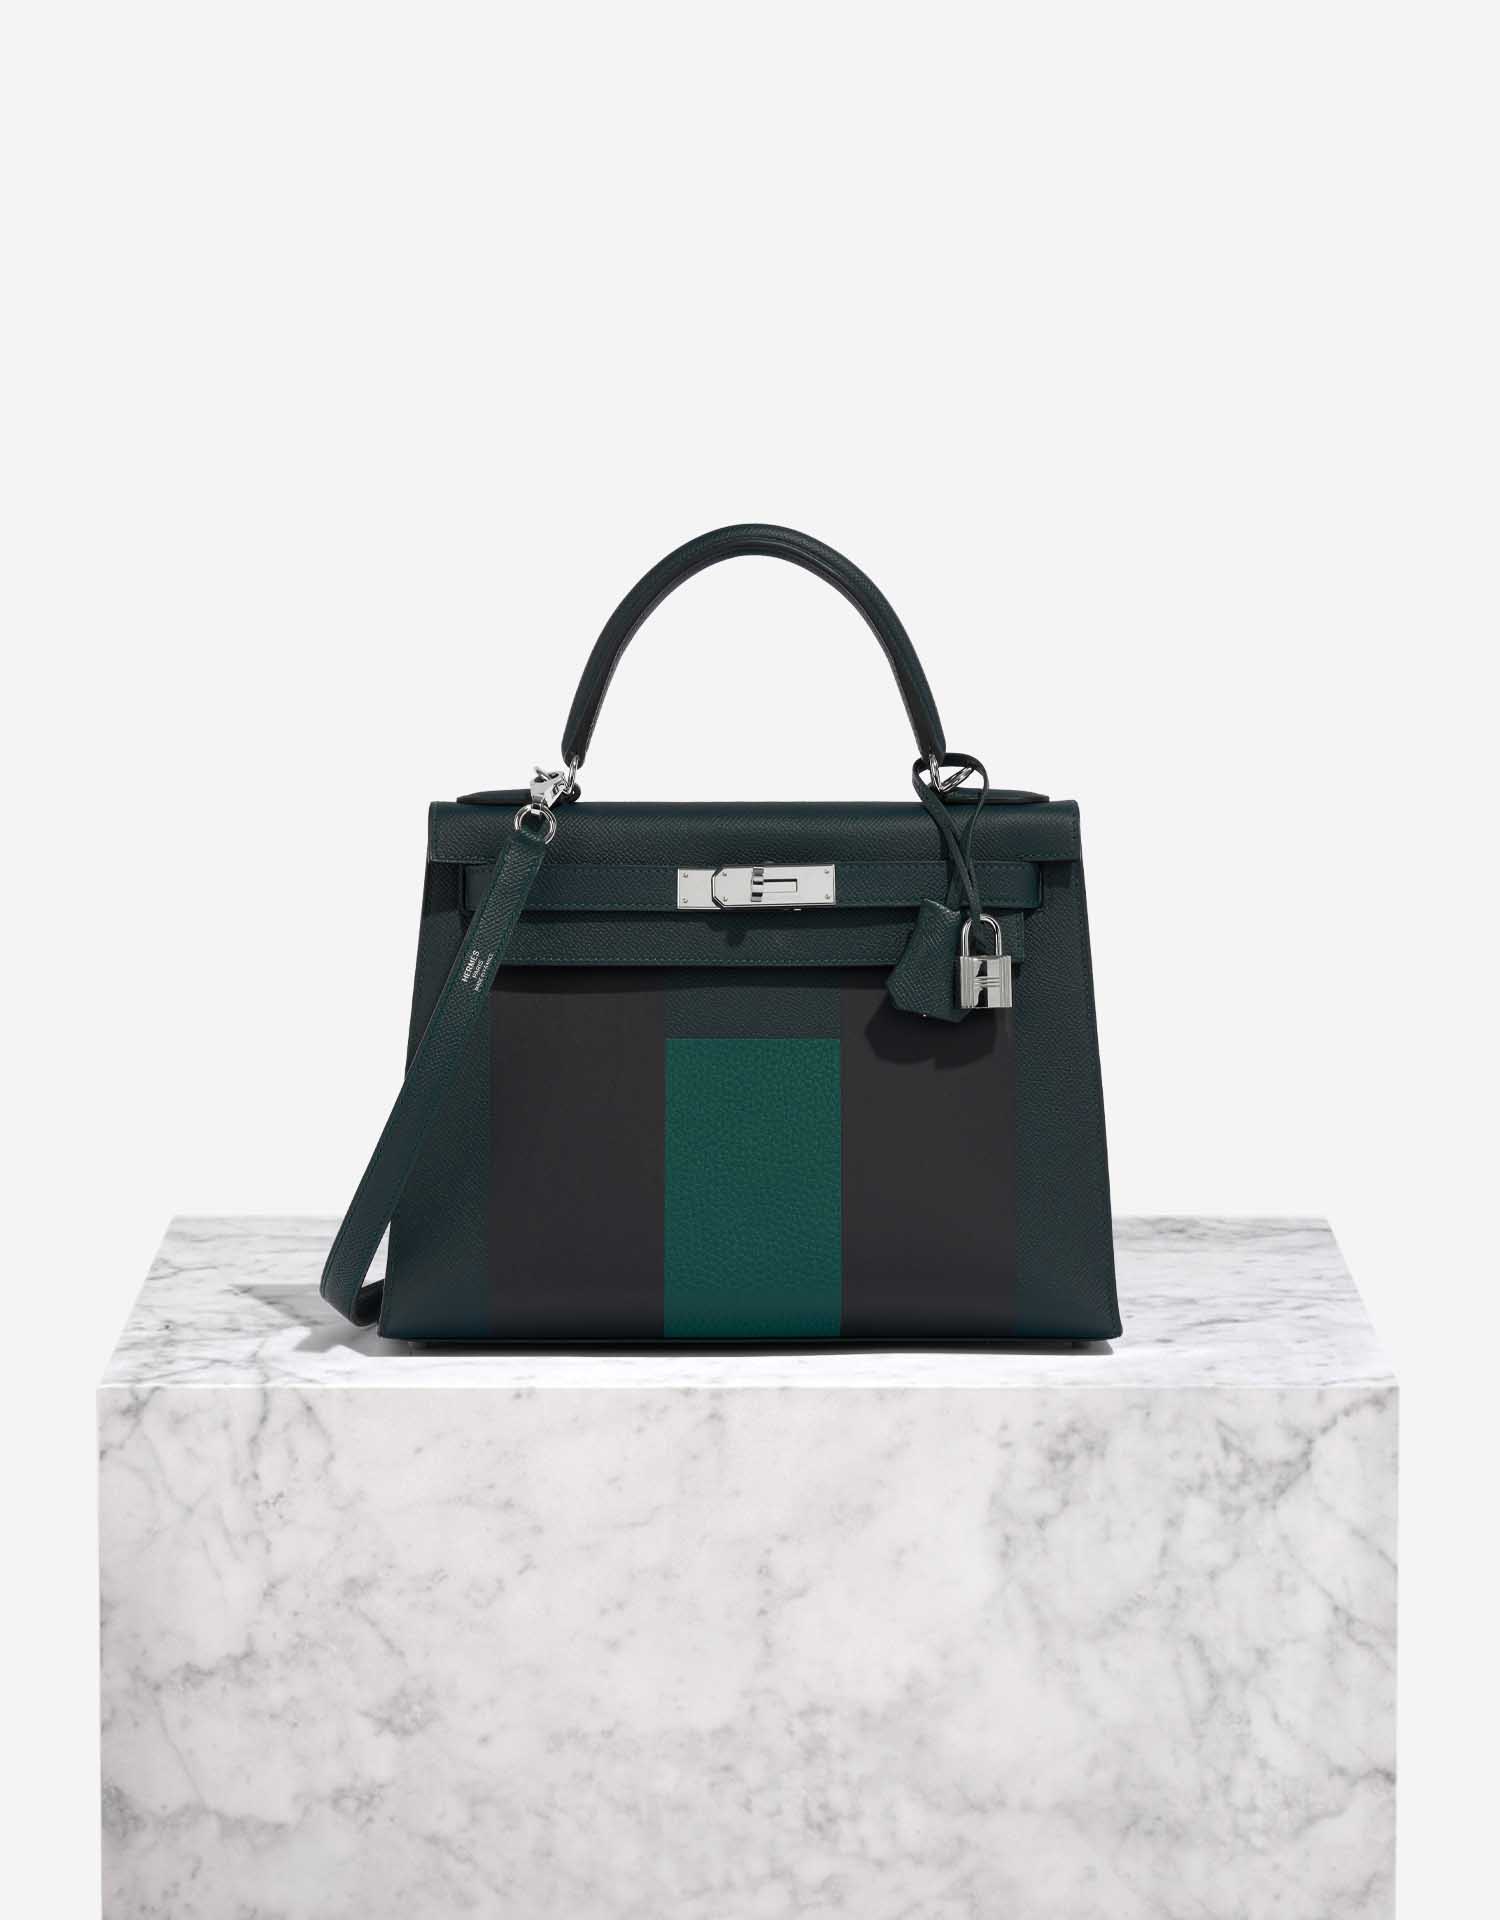 Hermès JPG Kelly Pochette Malachite Bag